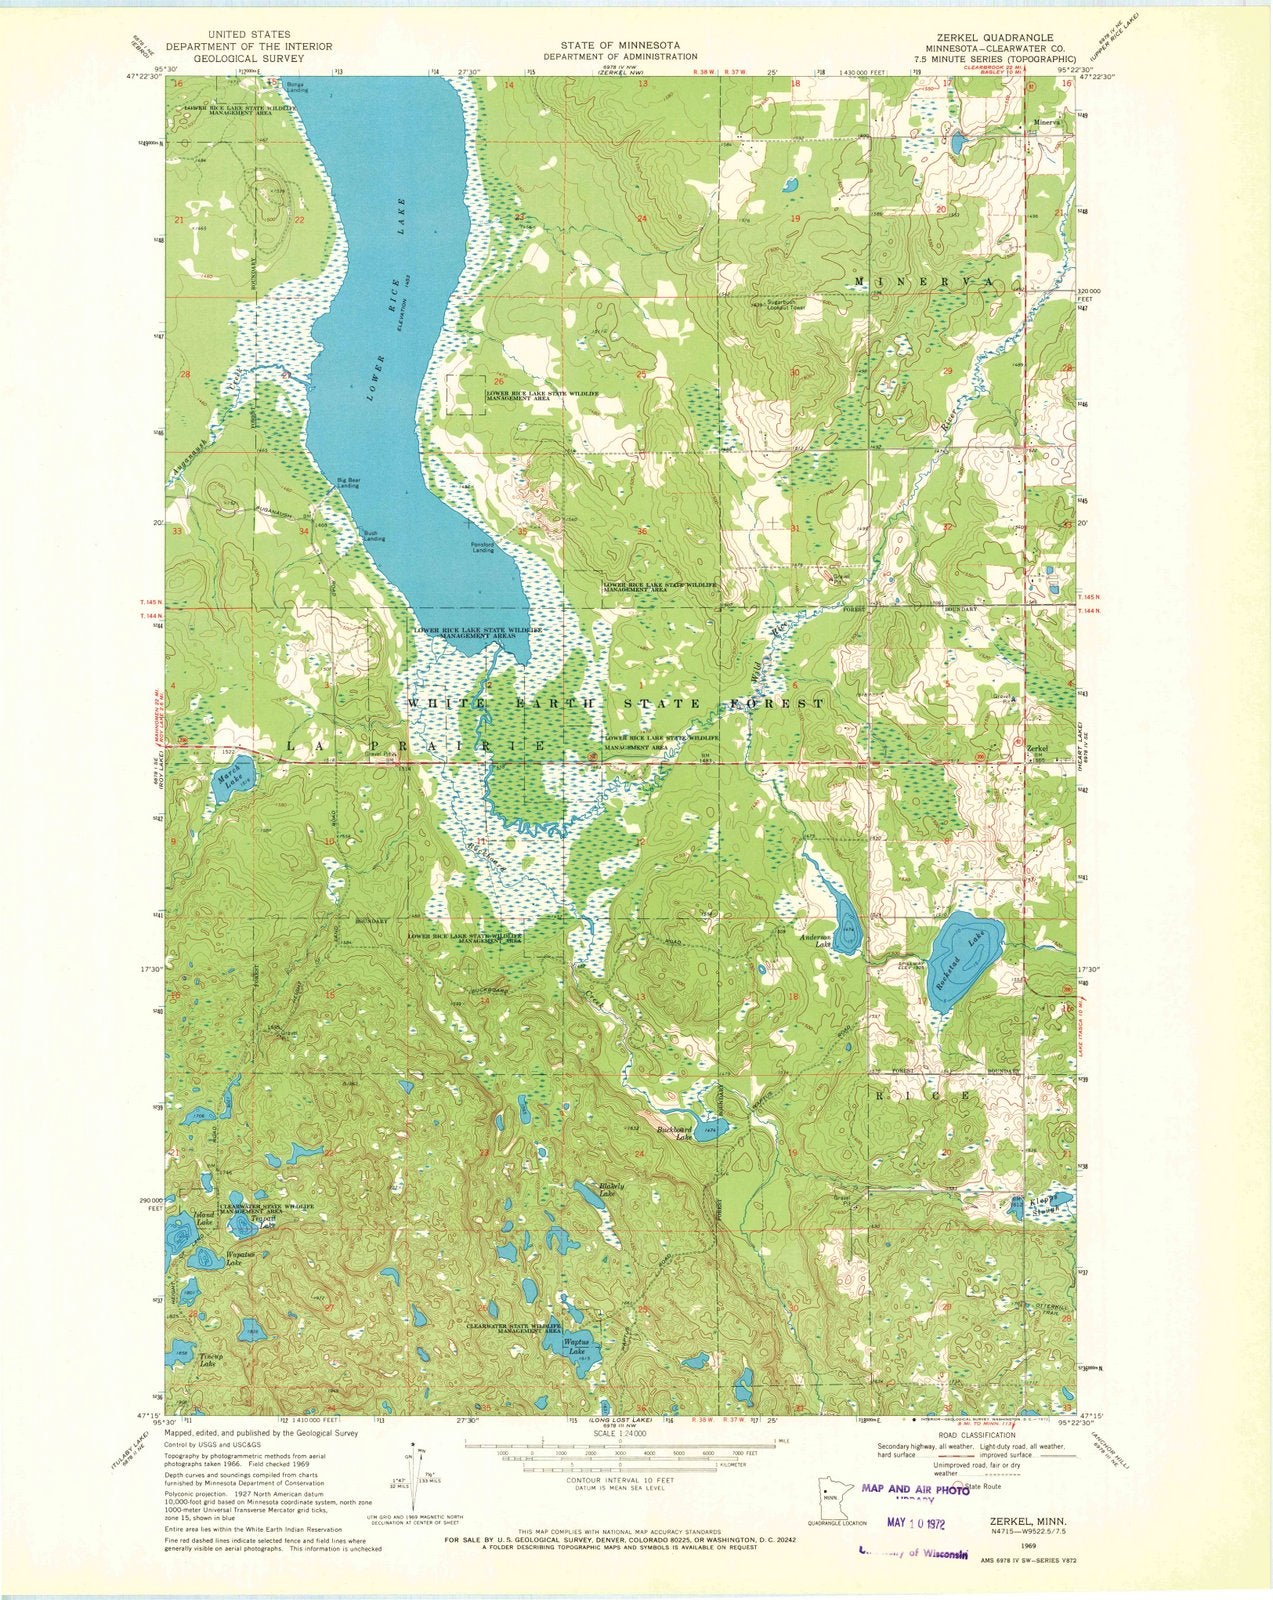 1969 Zerkel, MN - Minnesota - USGS Topographic Map v2